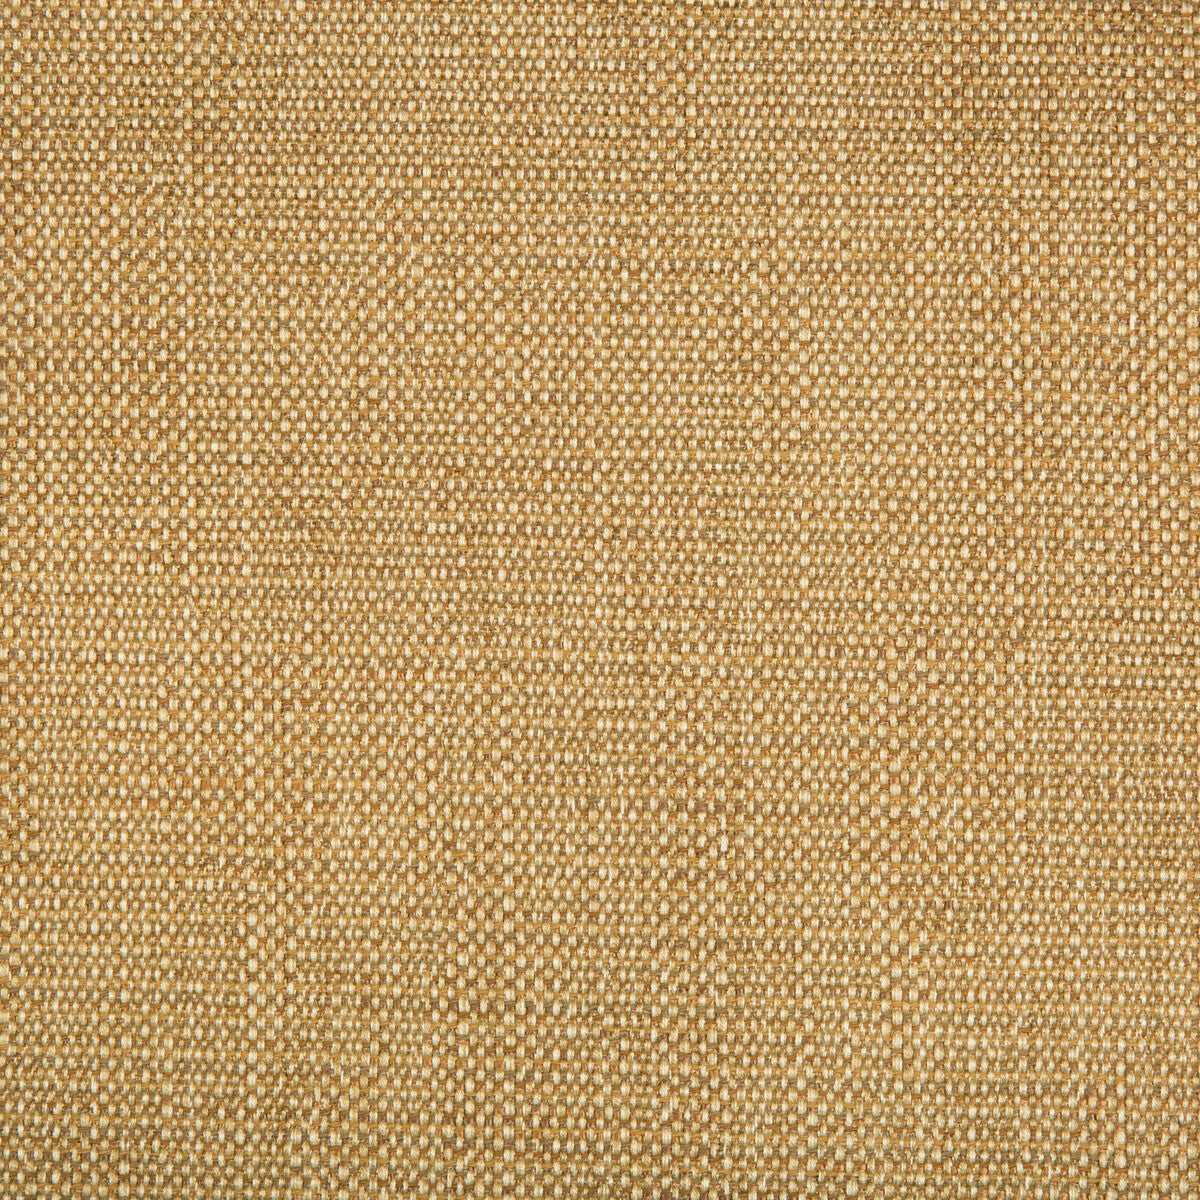 Kravet Design fabric in 34774-616 color - pattern 34774.616.0 - by Kravet Design in the Gis collection